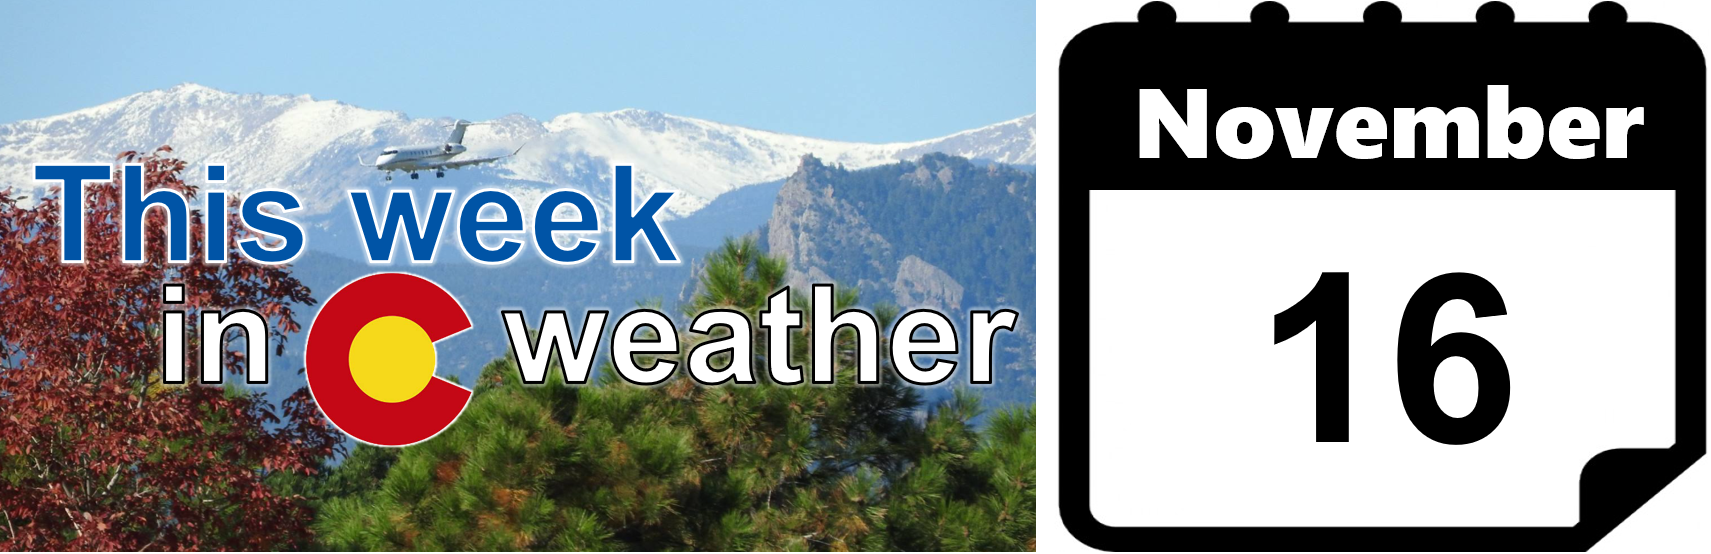 This week in Colorado weather November 16, 2020 BoulderCAST